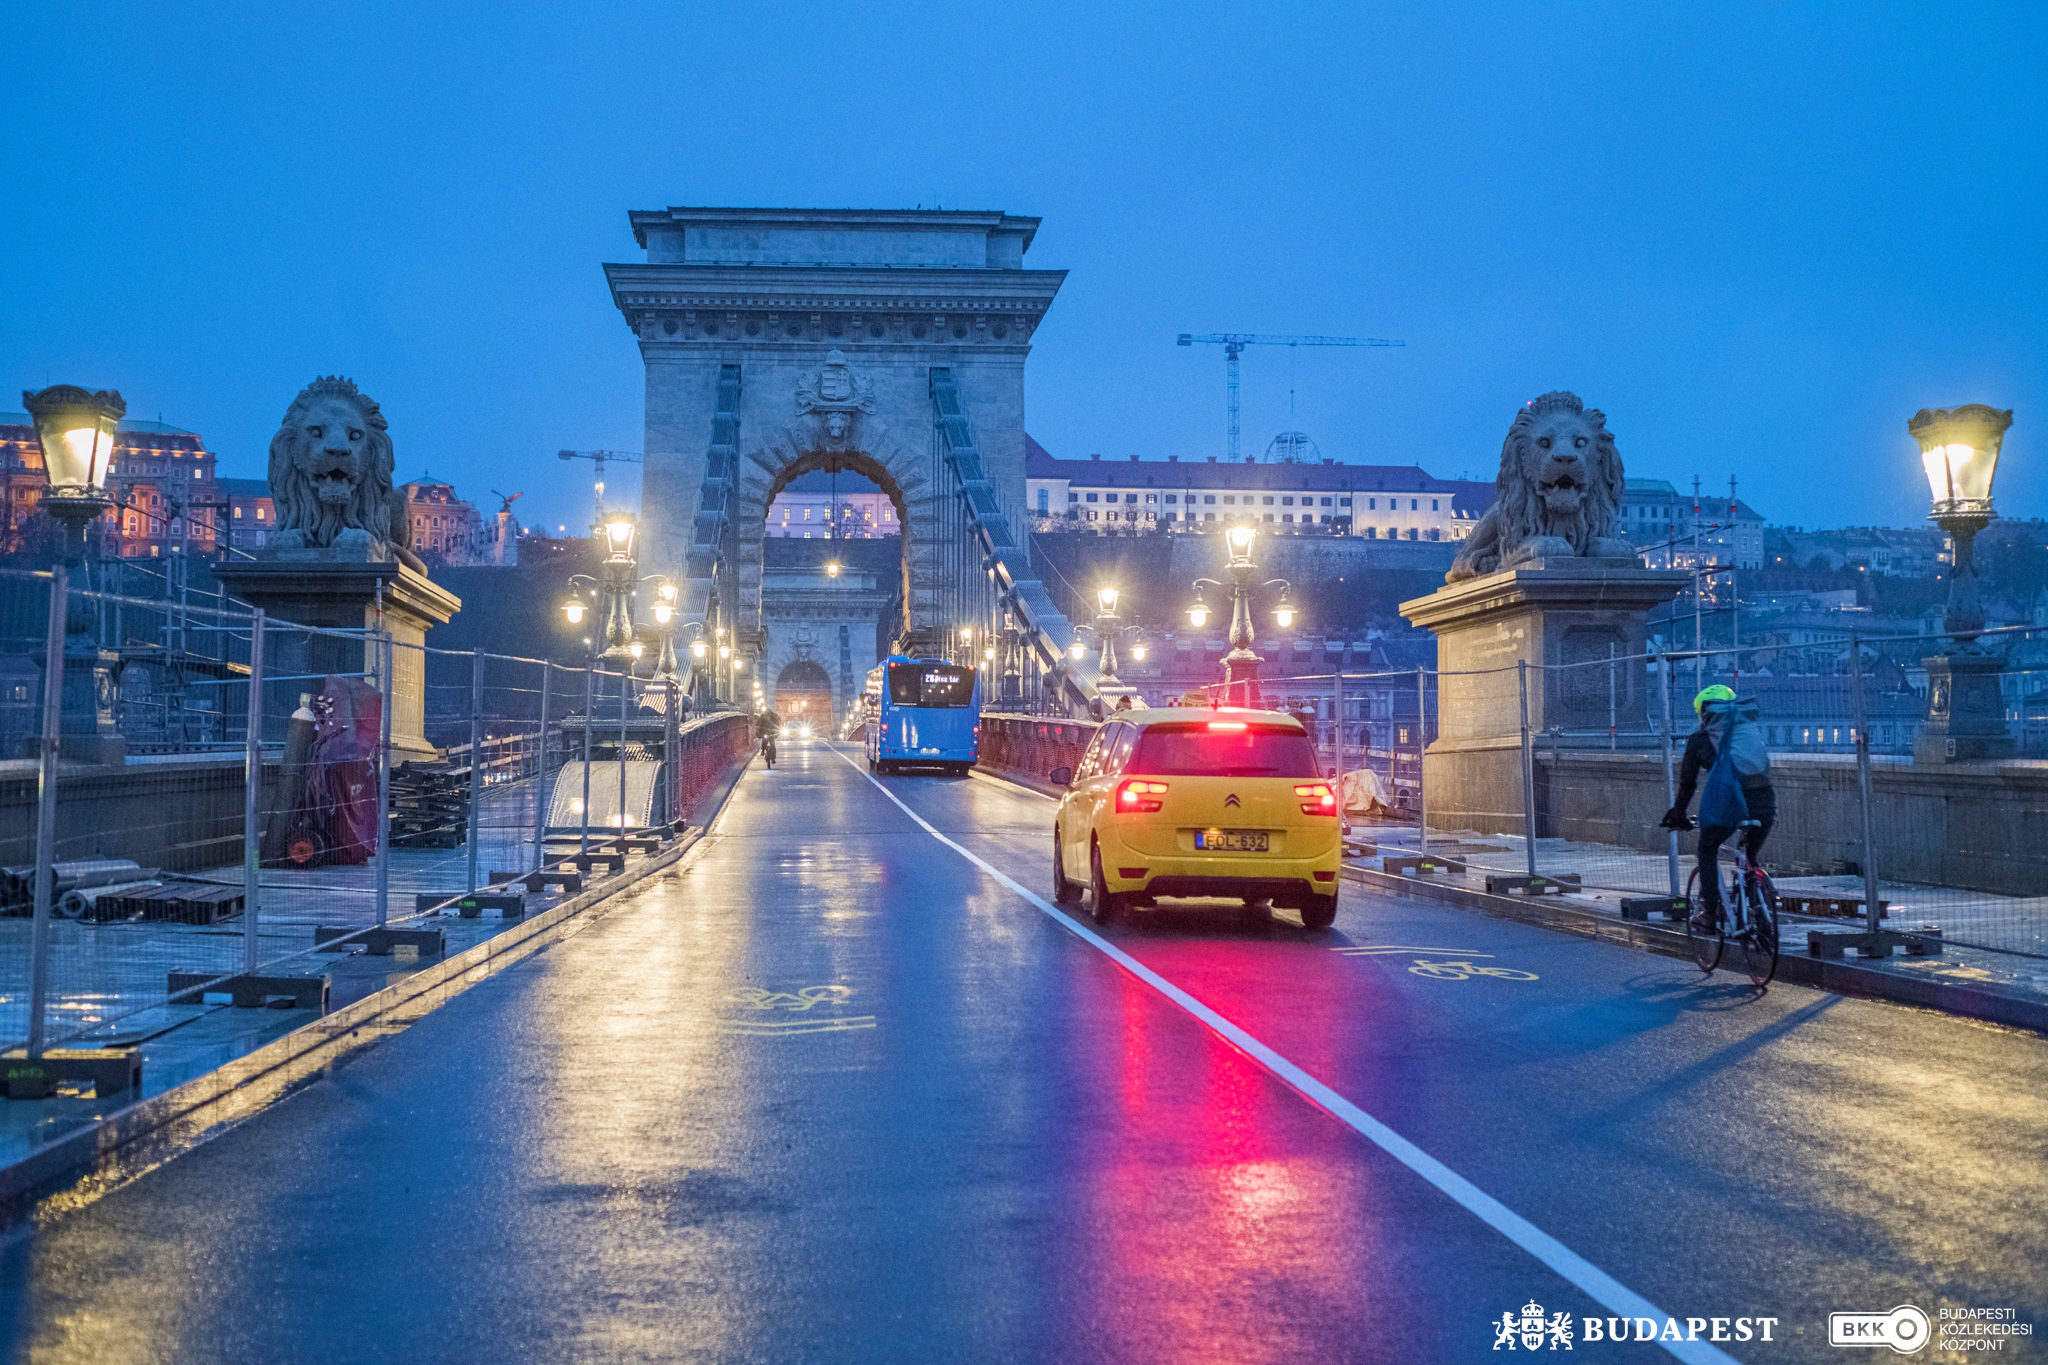 Mayor Thanks Many - inc Gov't - While Reopening Budapest's Chain Bridge